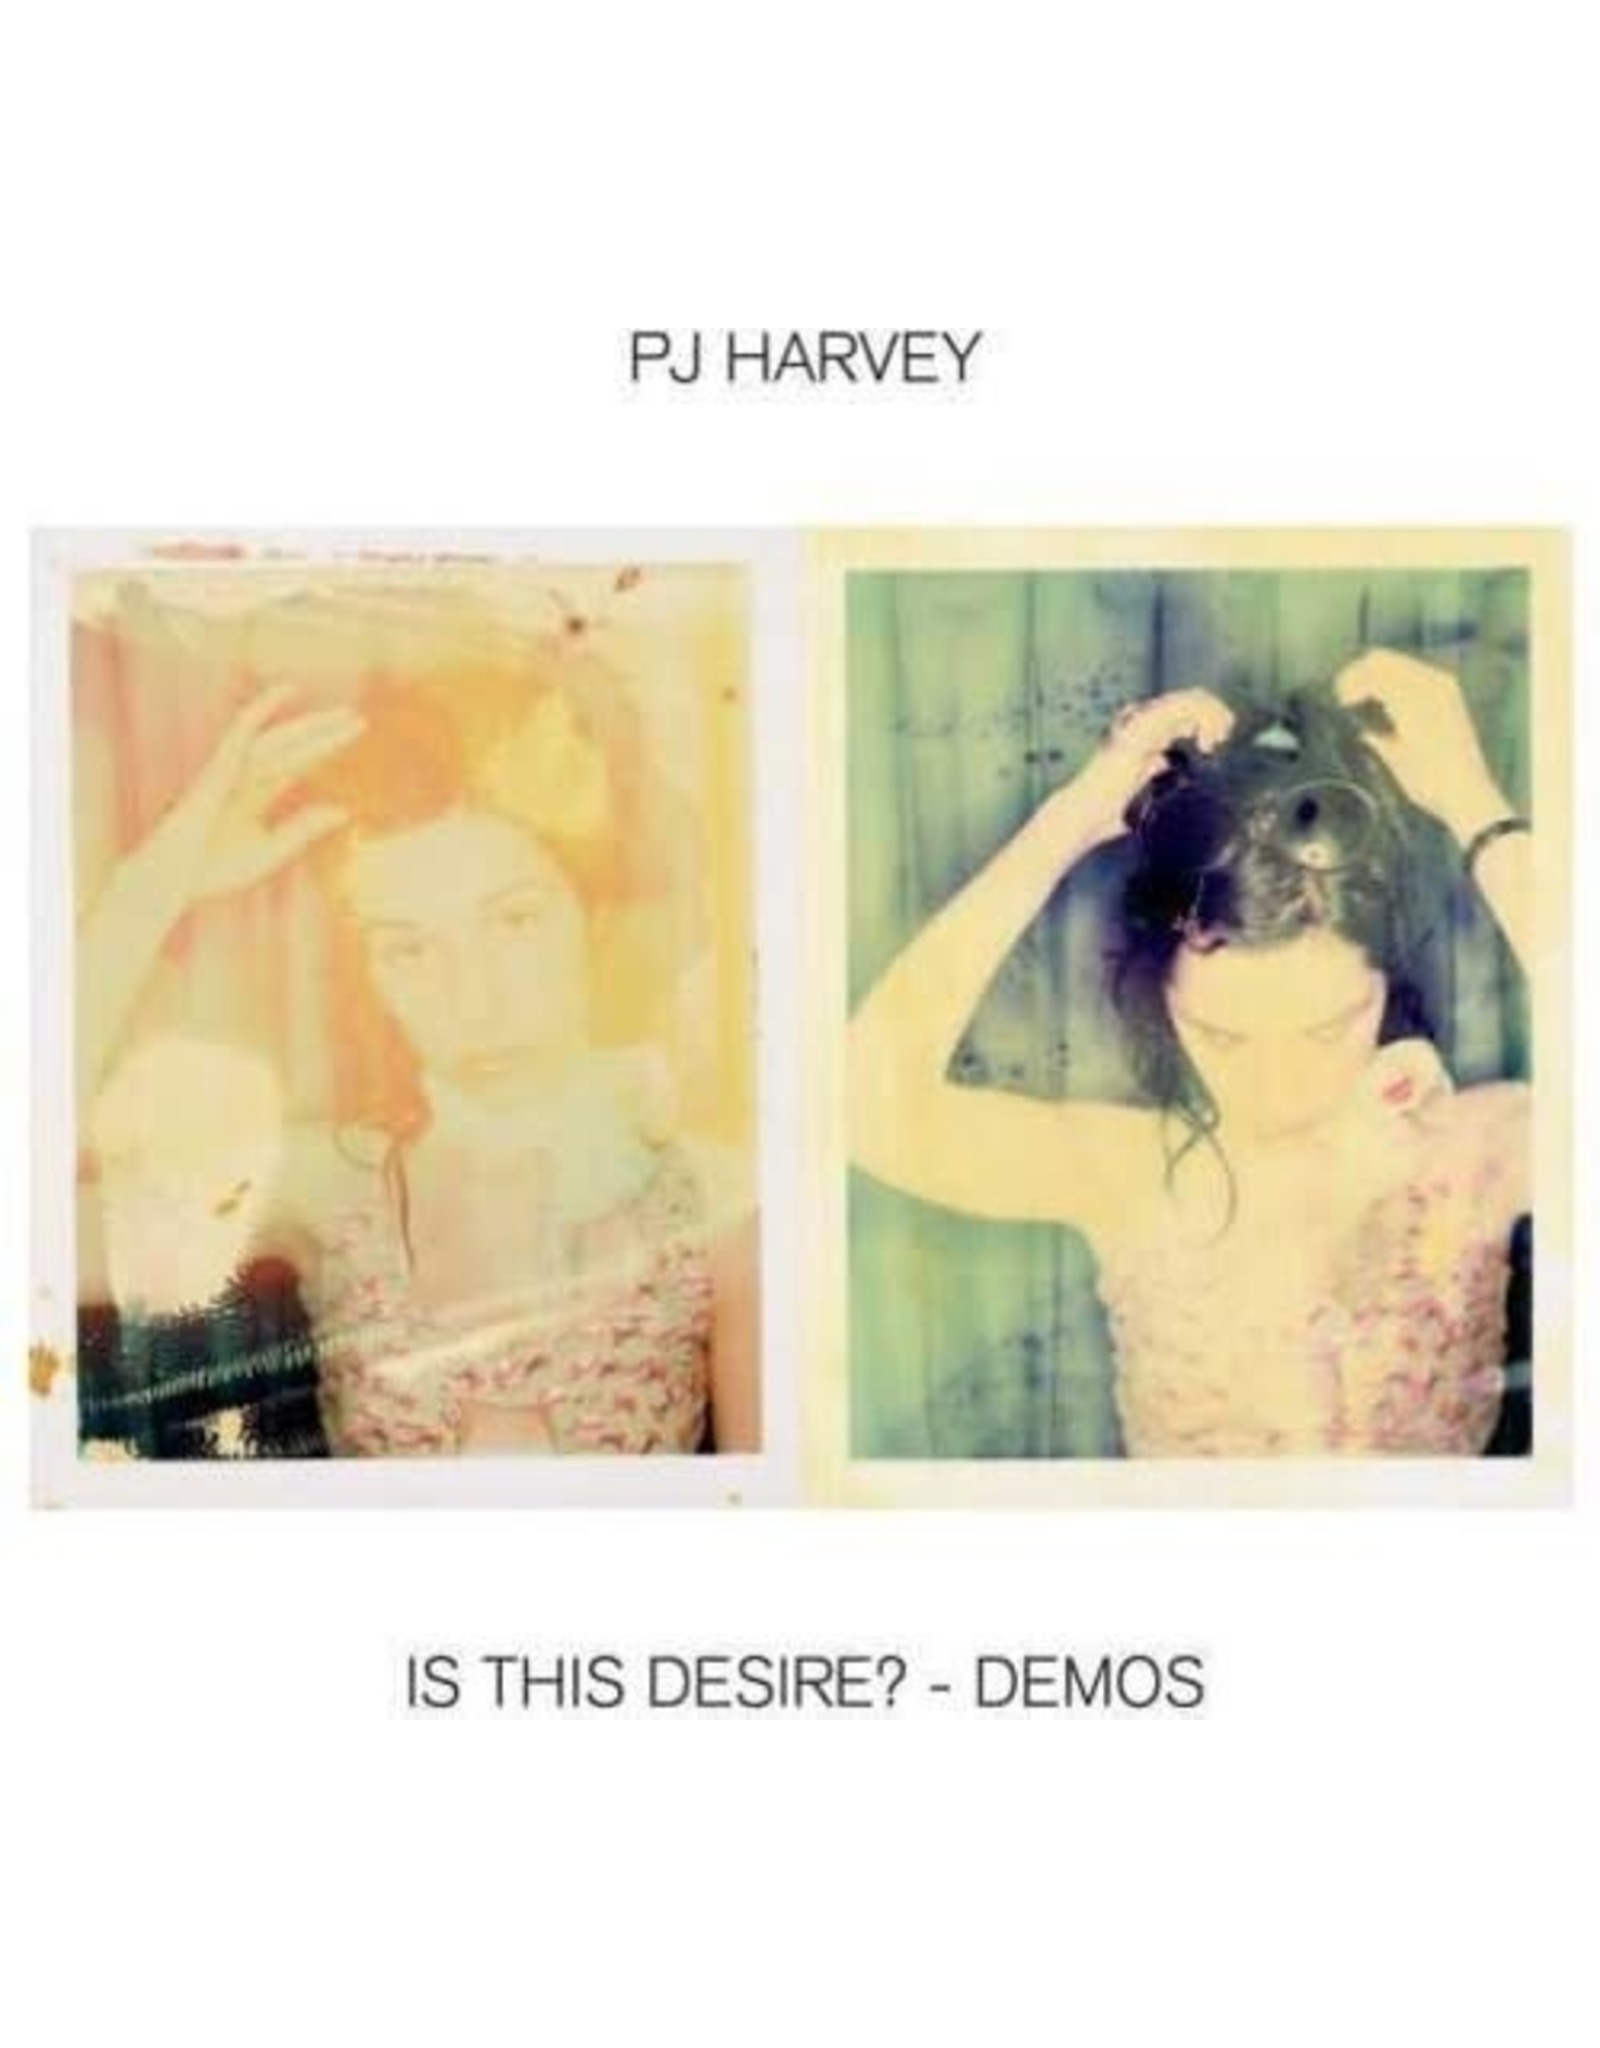 New Vinyl PJ Harvey - Is This Desire? (Demos) LP